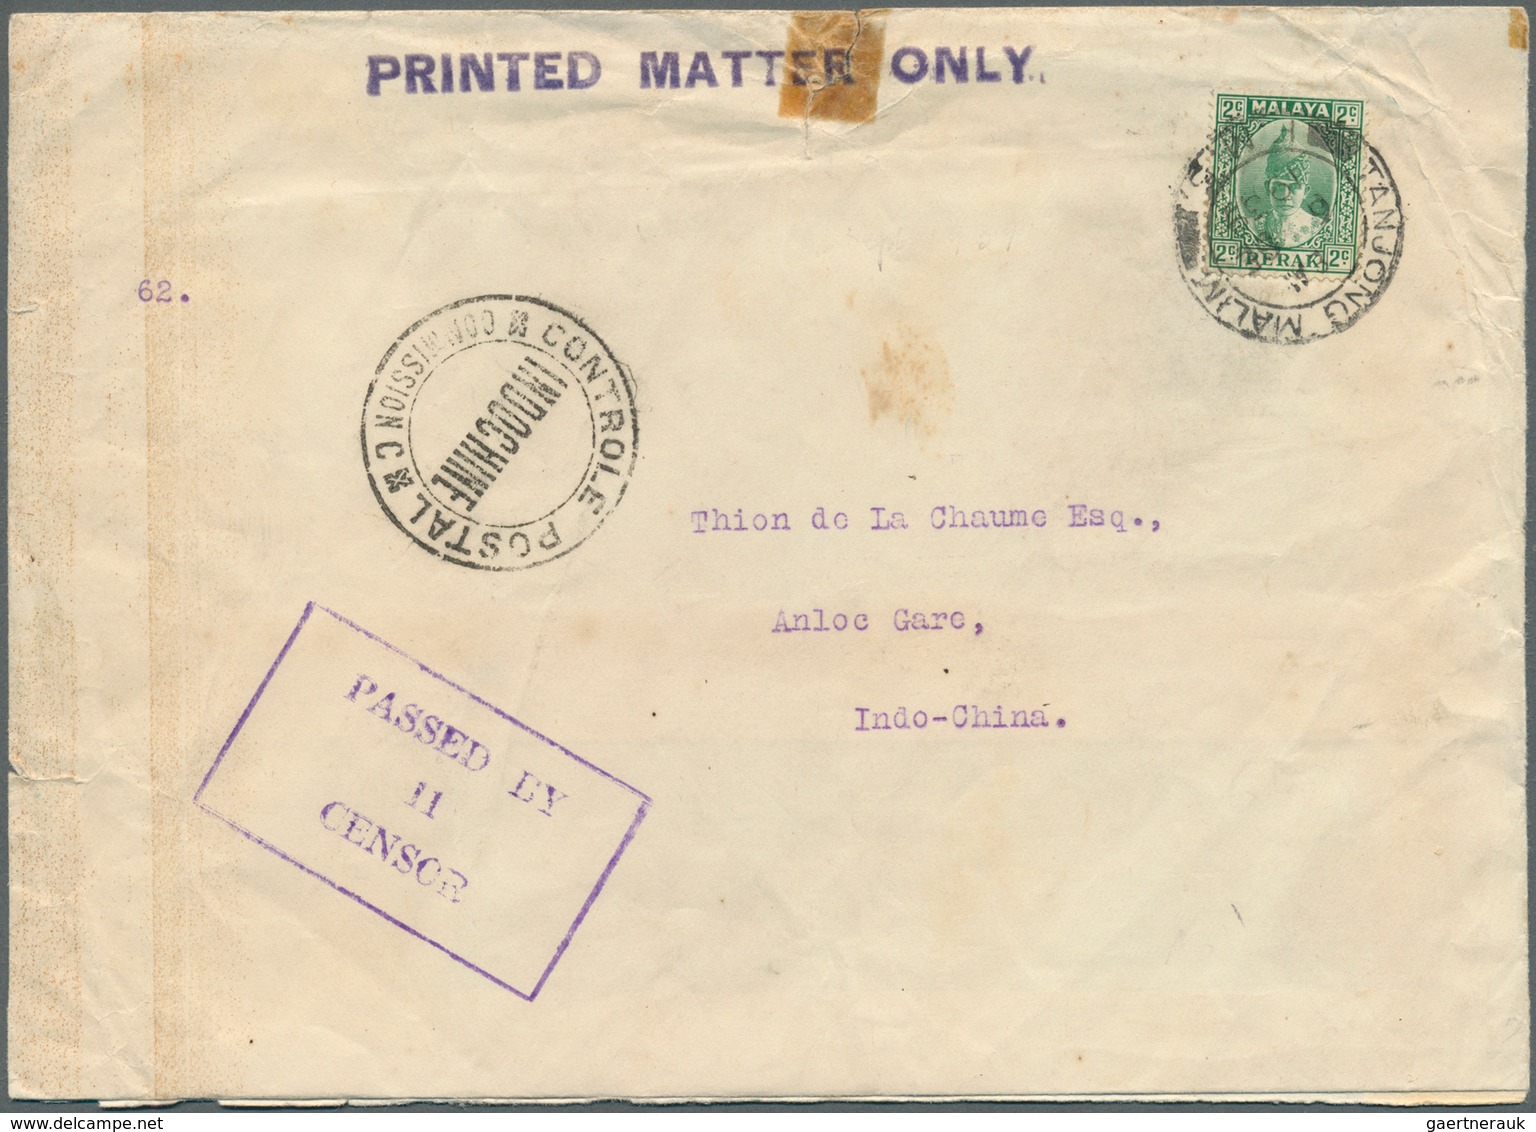 Malaiische Staaten - Perak: 1939. Envelope Addressed To Indo-China Headed 'Printed Matter Only' Bear - Perak